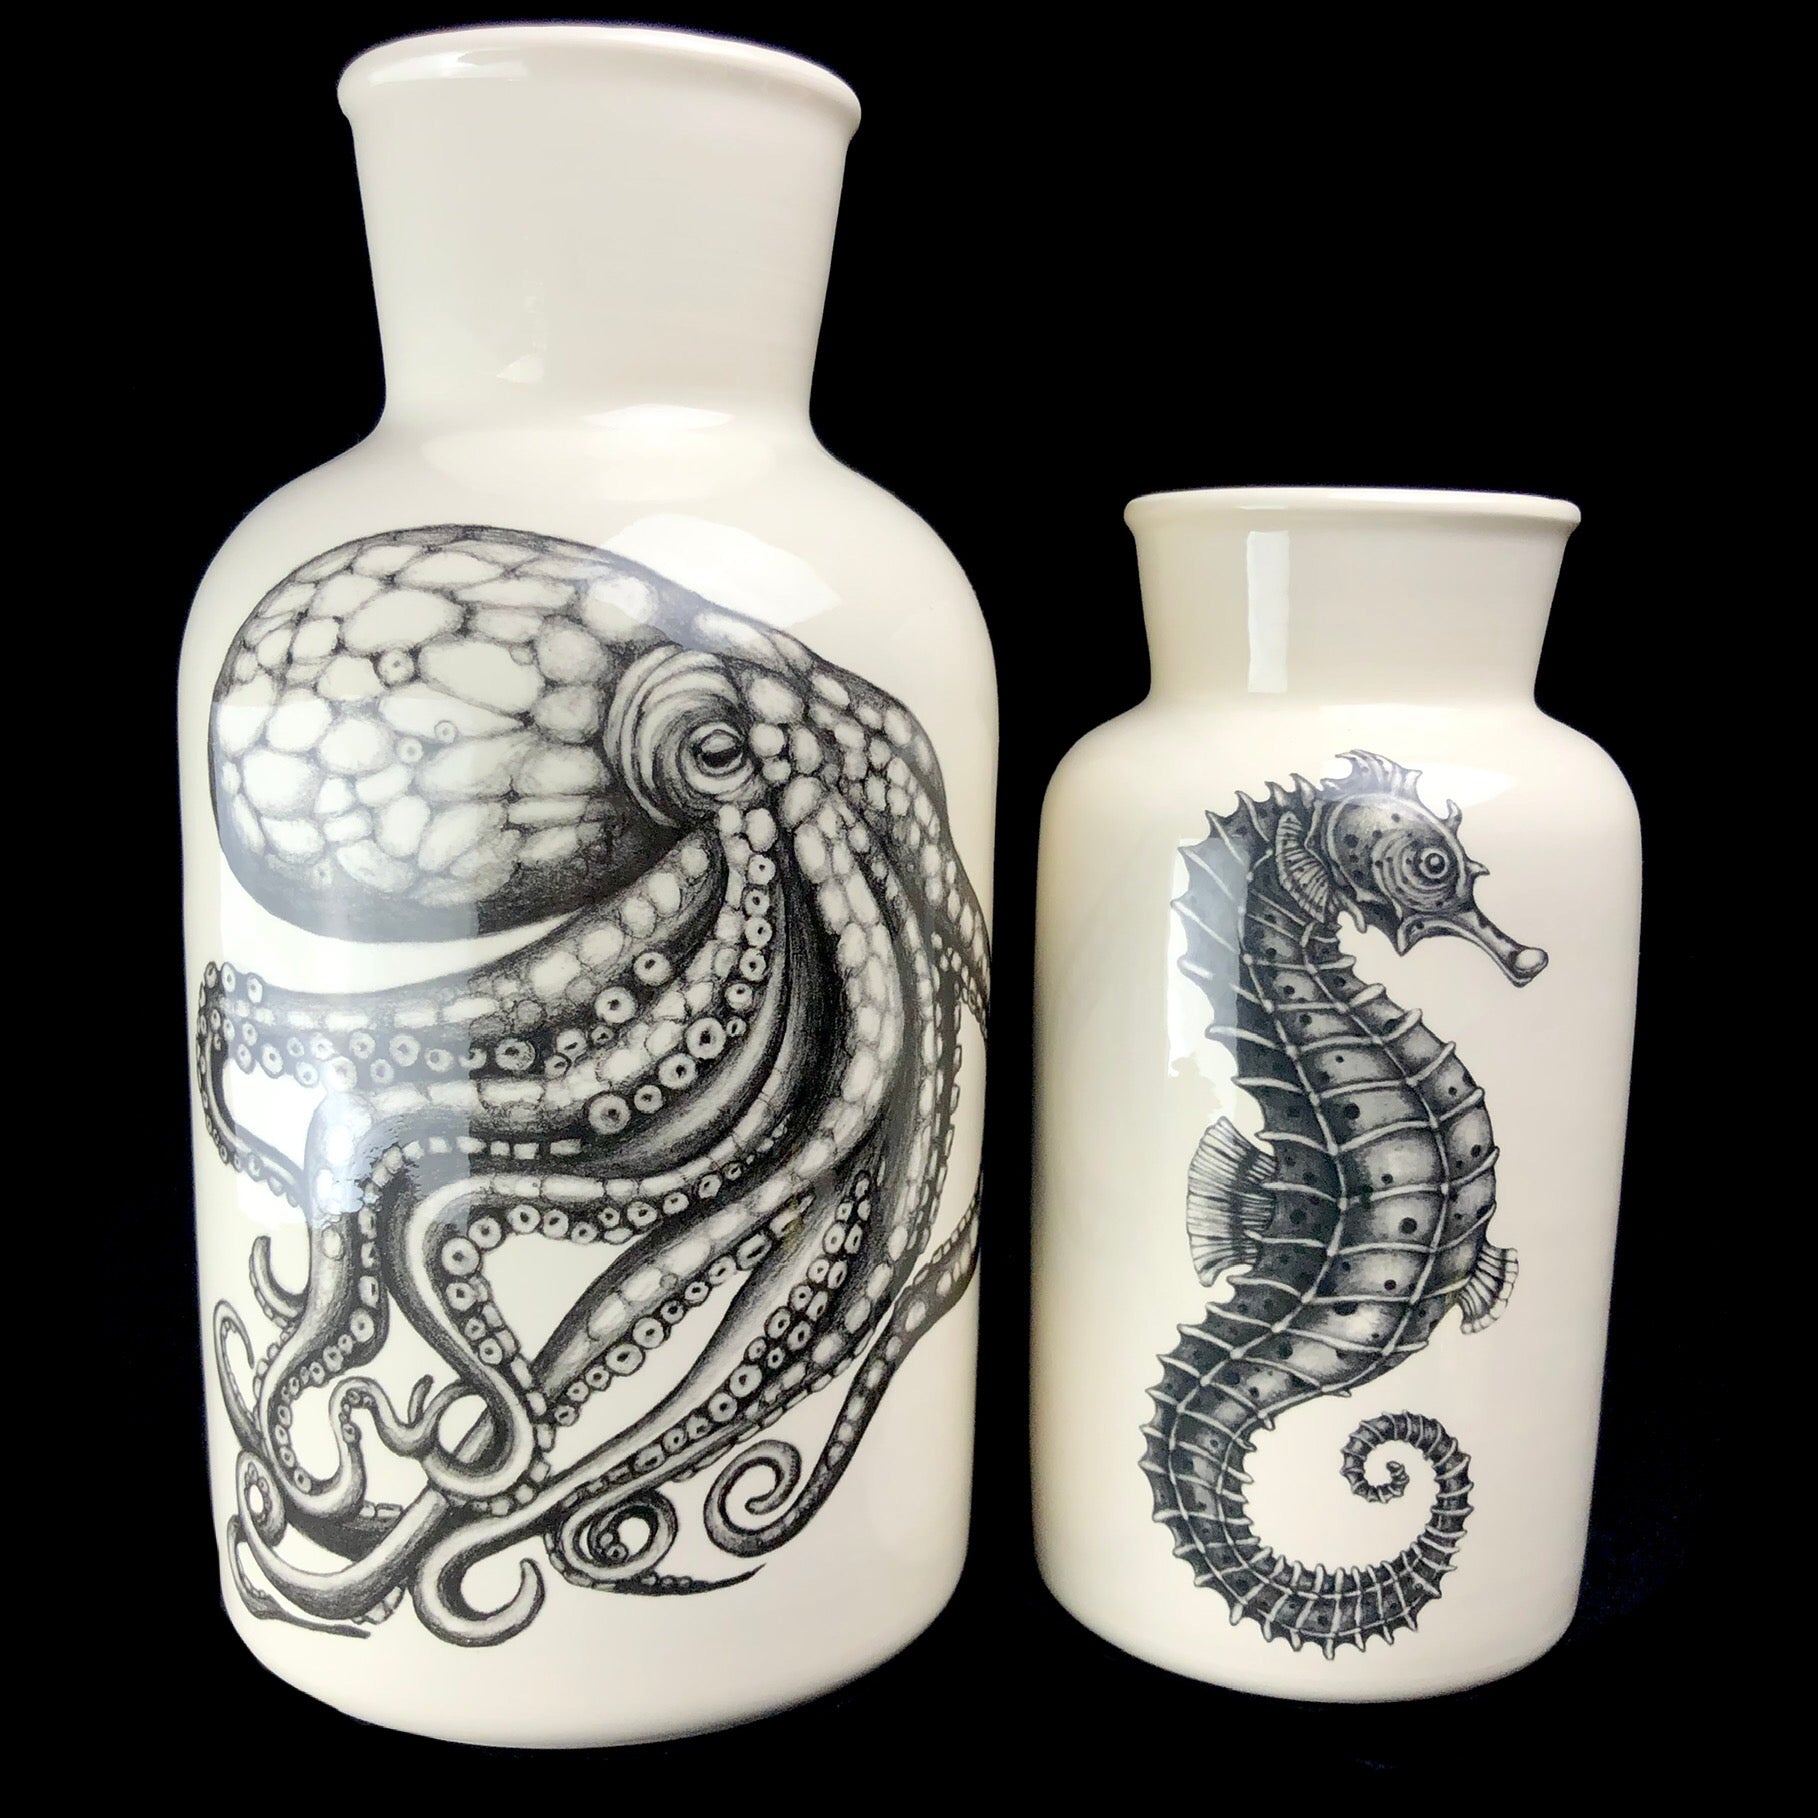 Seahorse vase sitting next to Octopus Vase of larger size